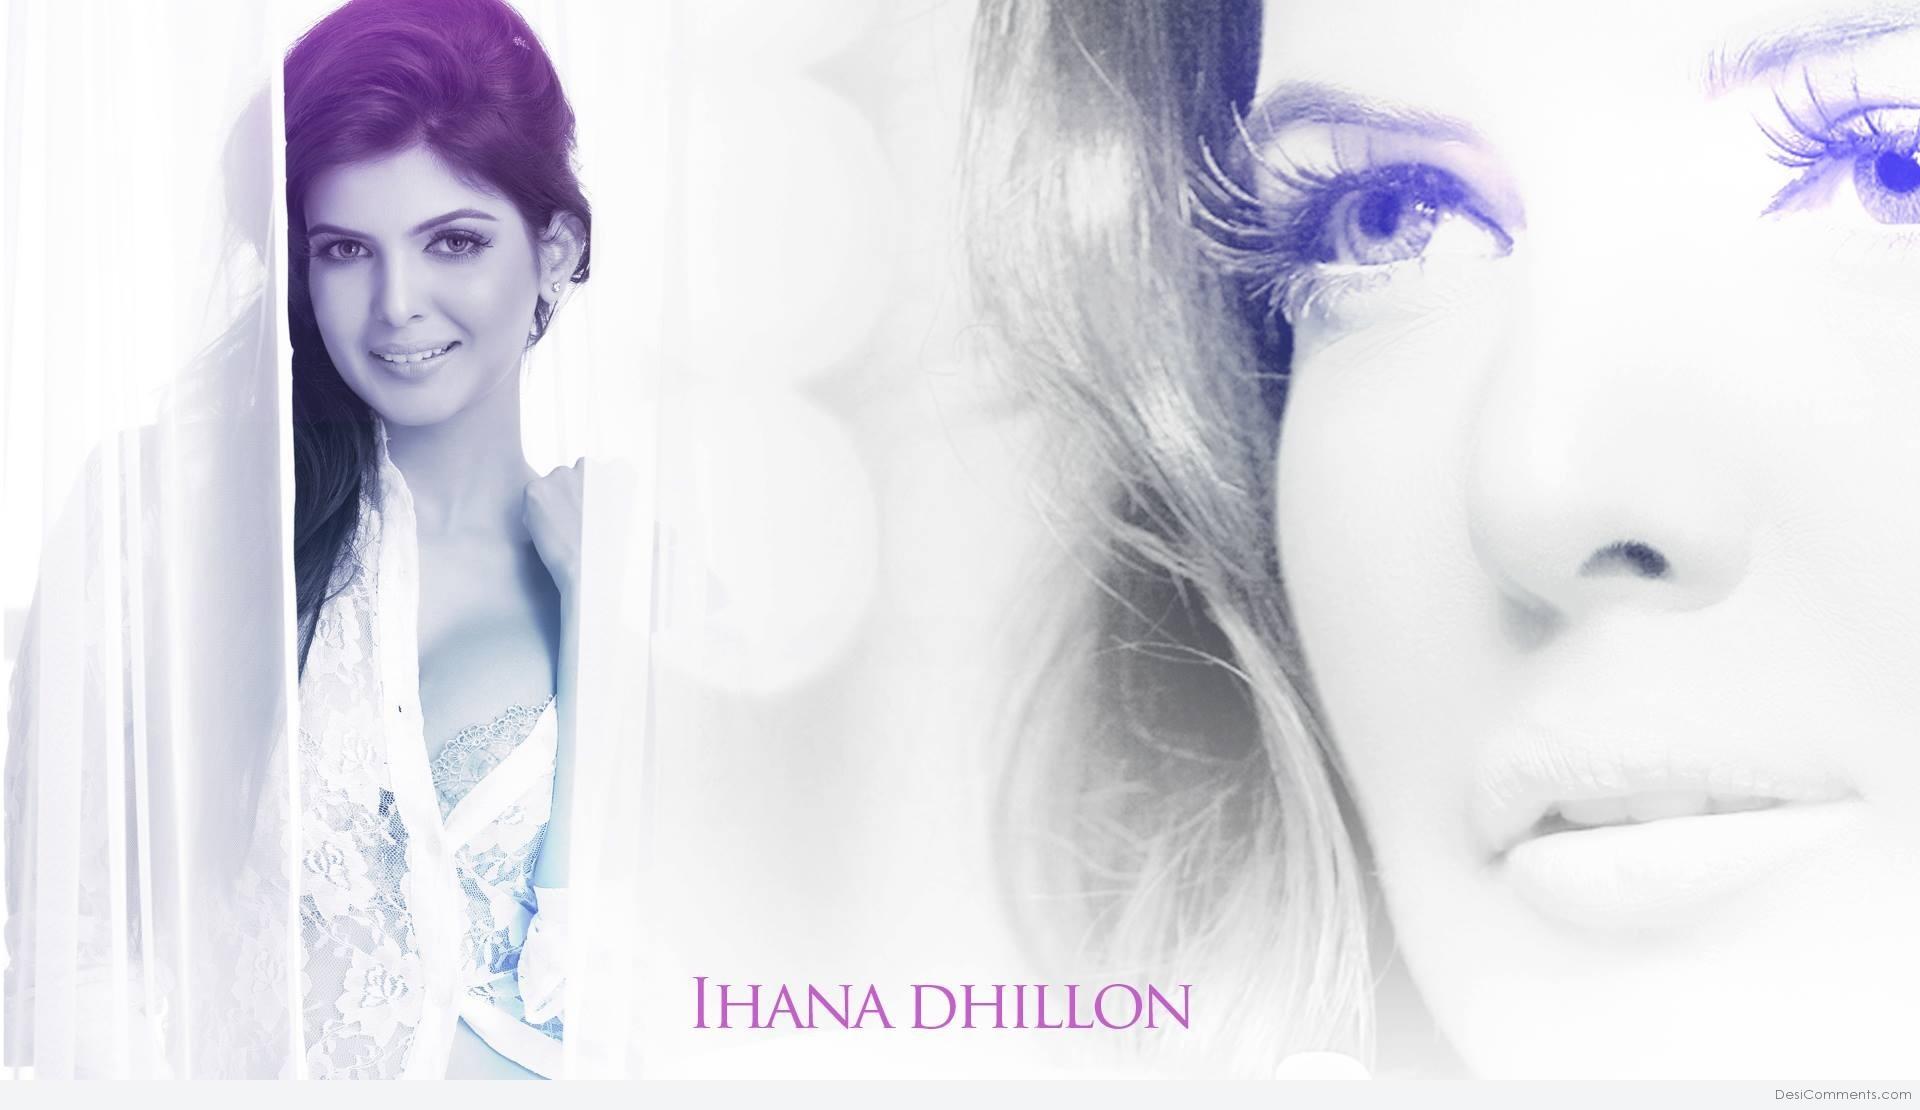 Amazing Ihana Dhillon Pictures & Backgrounds